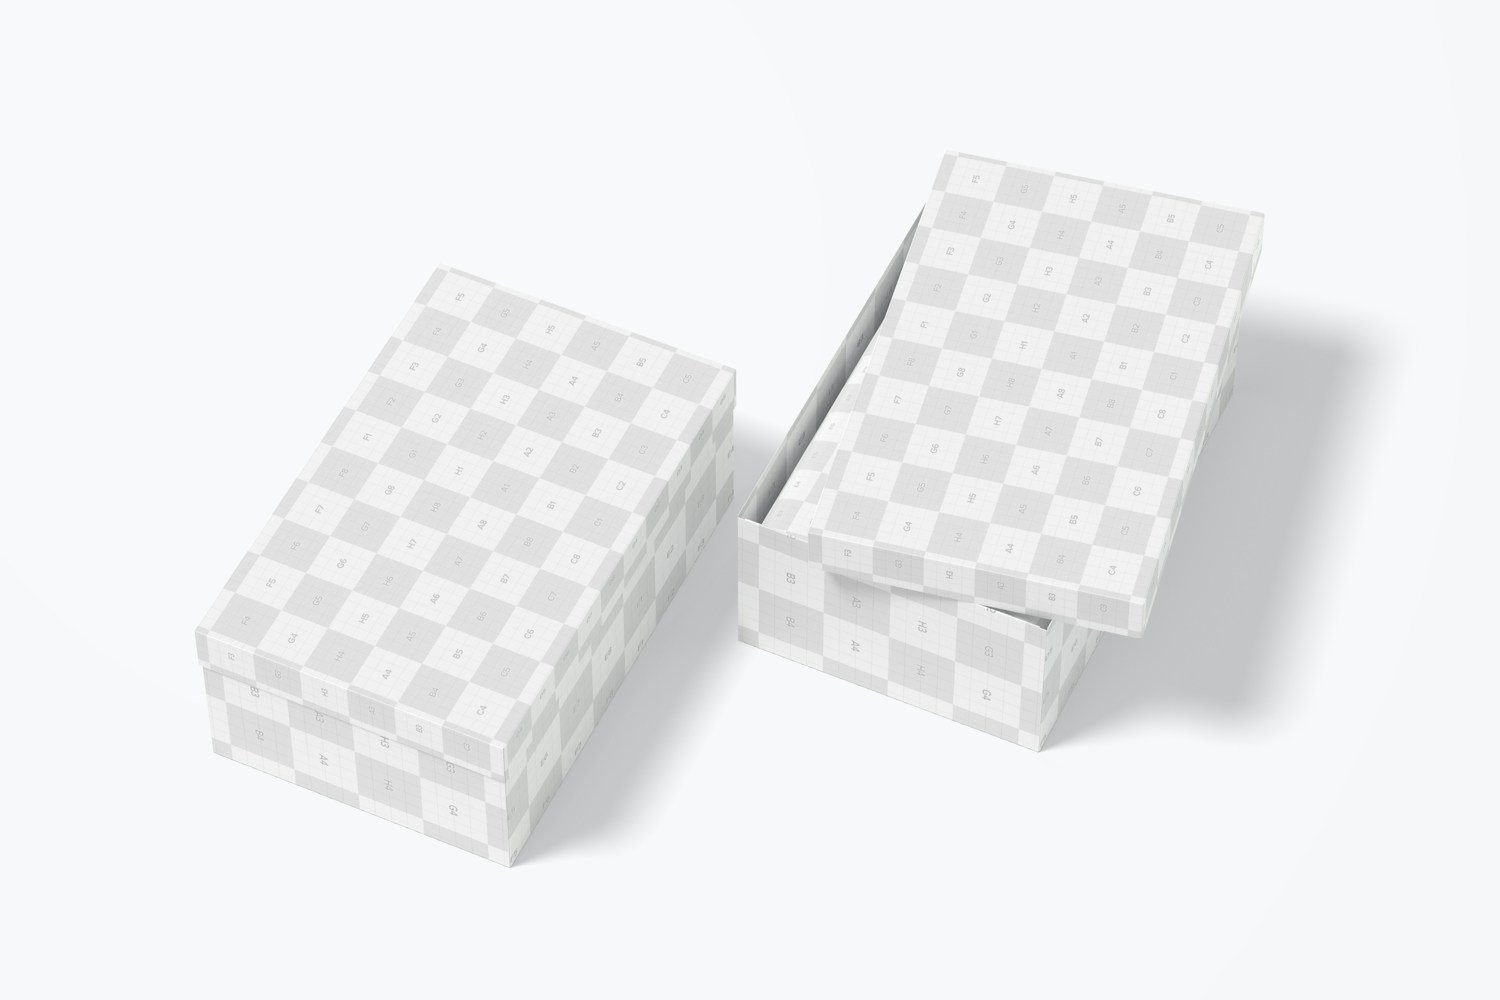 Carton Shoe Boxes Mockup, Perspective